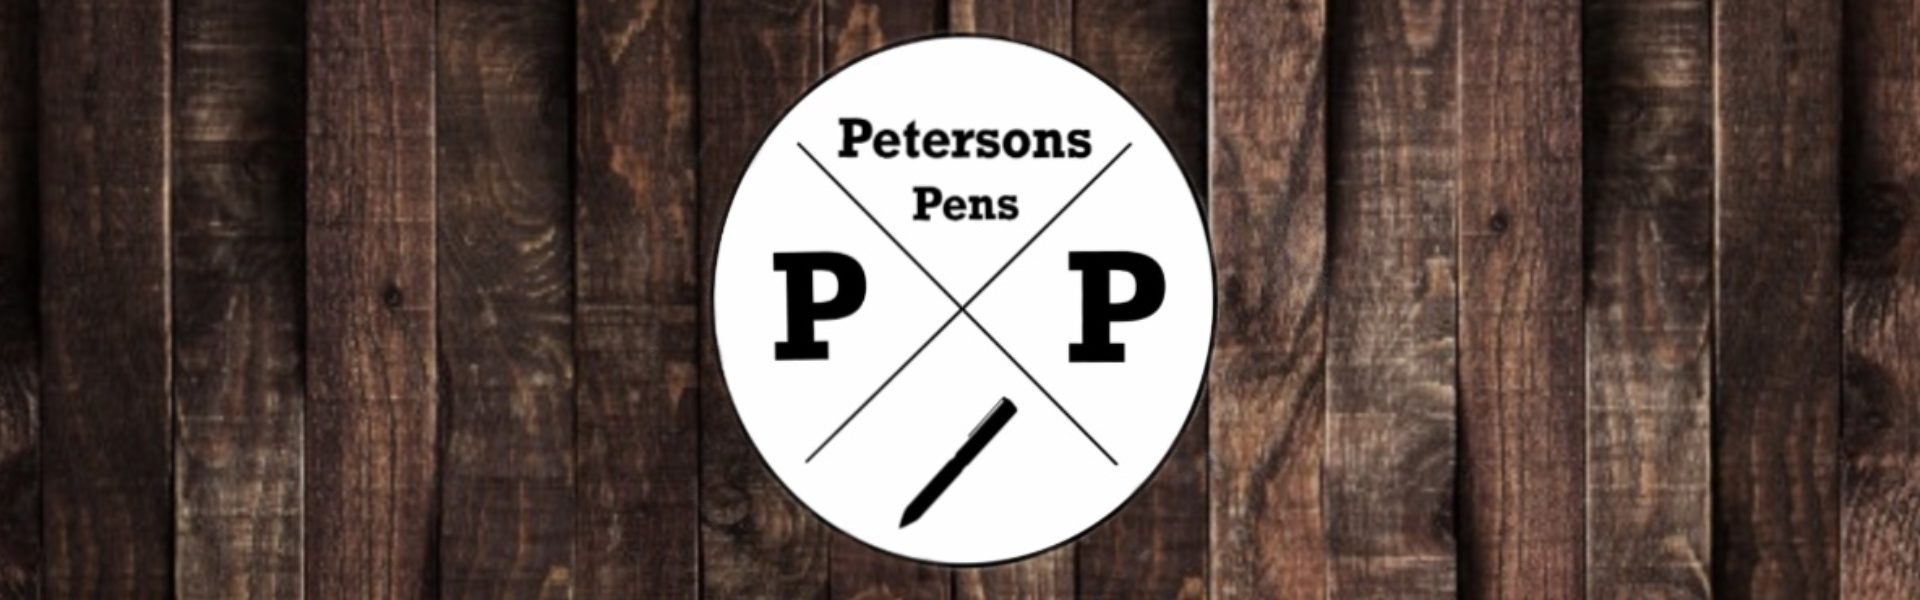 Petersons Pens